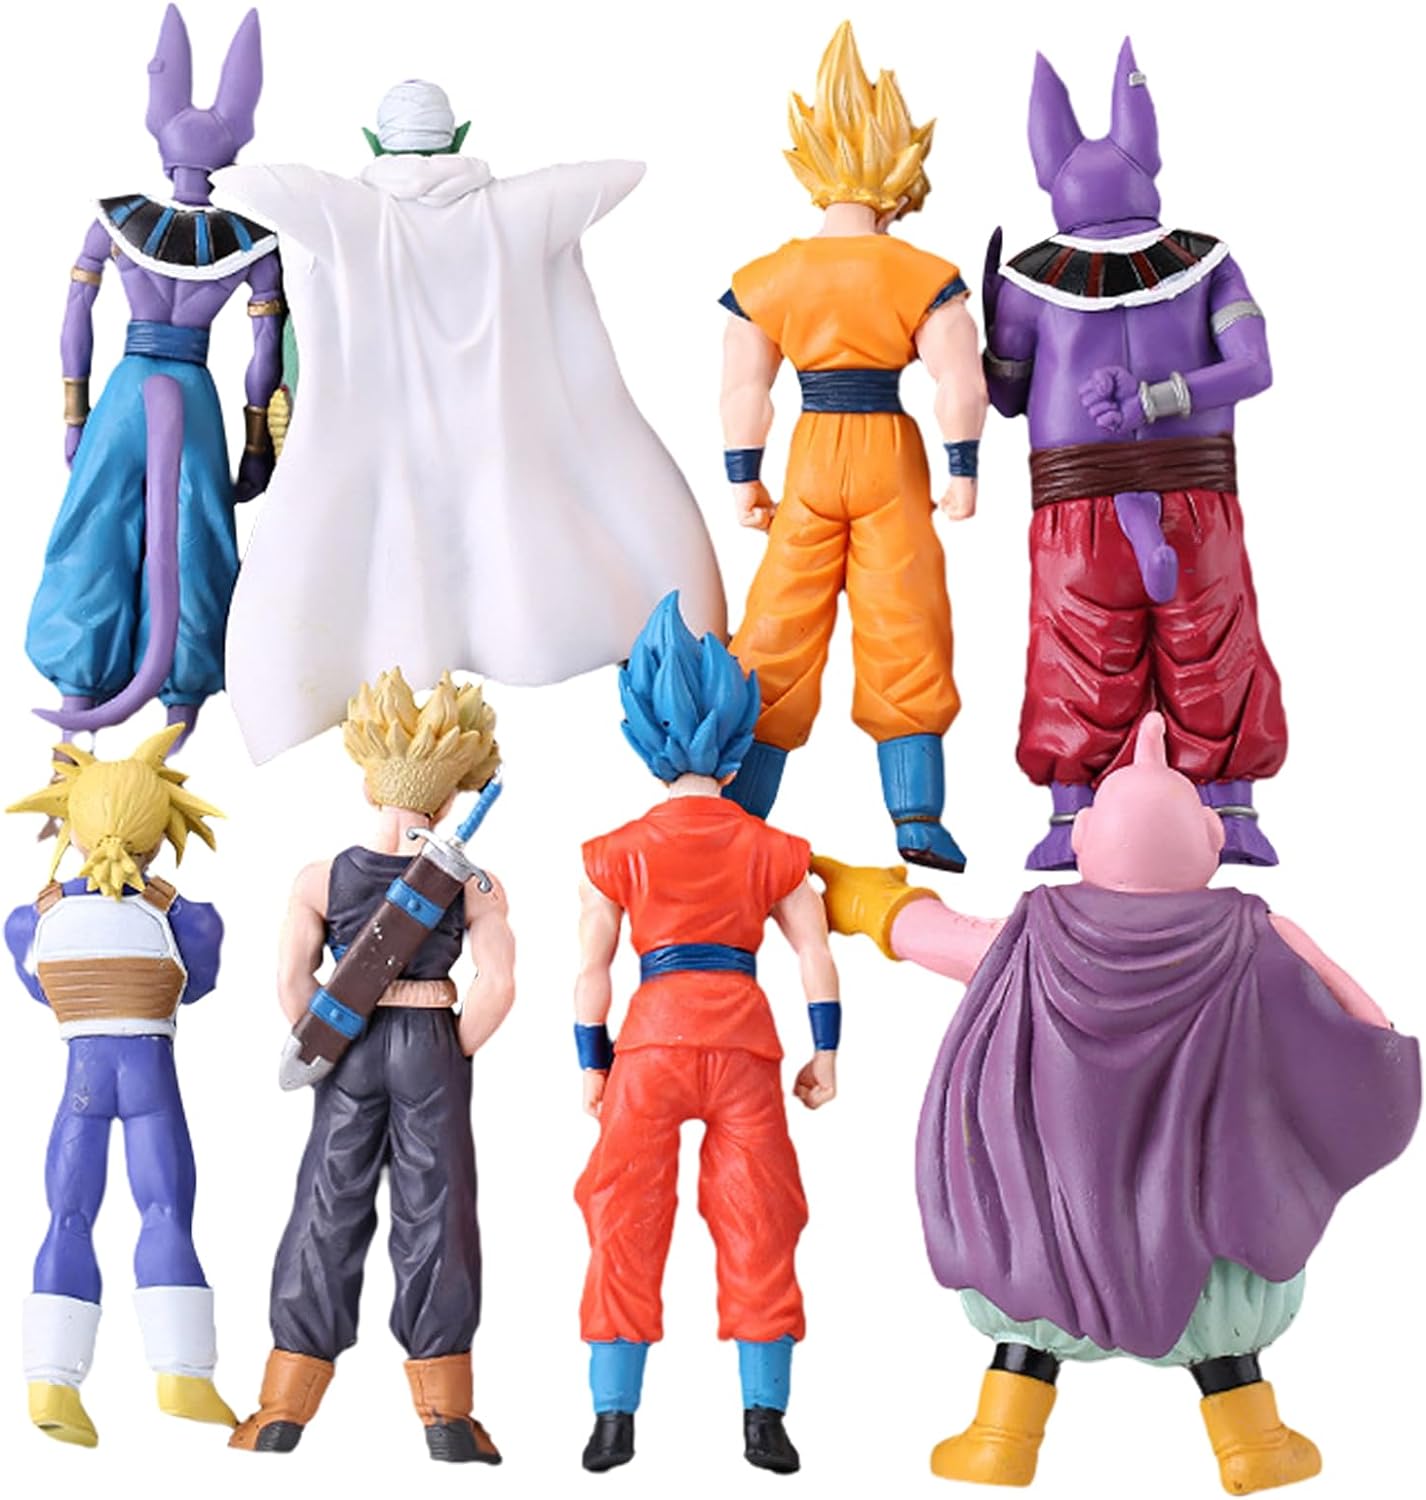 DBZ Goku Action Figures,Set of 8 Super Hero Anime Action Figure Toys 5.7" Cykapu